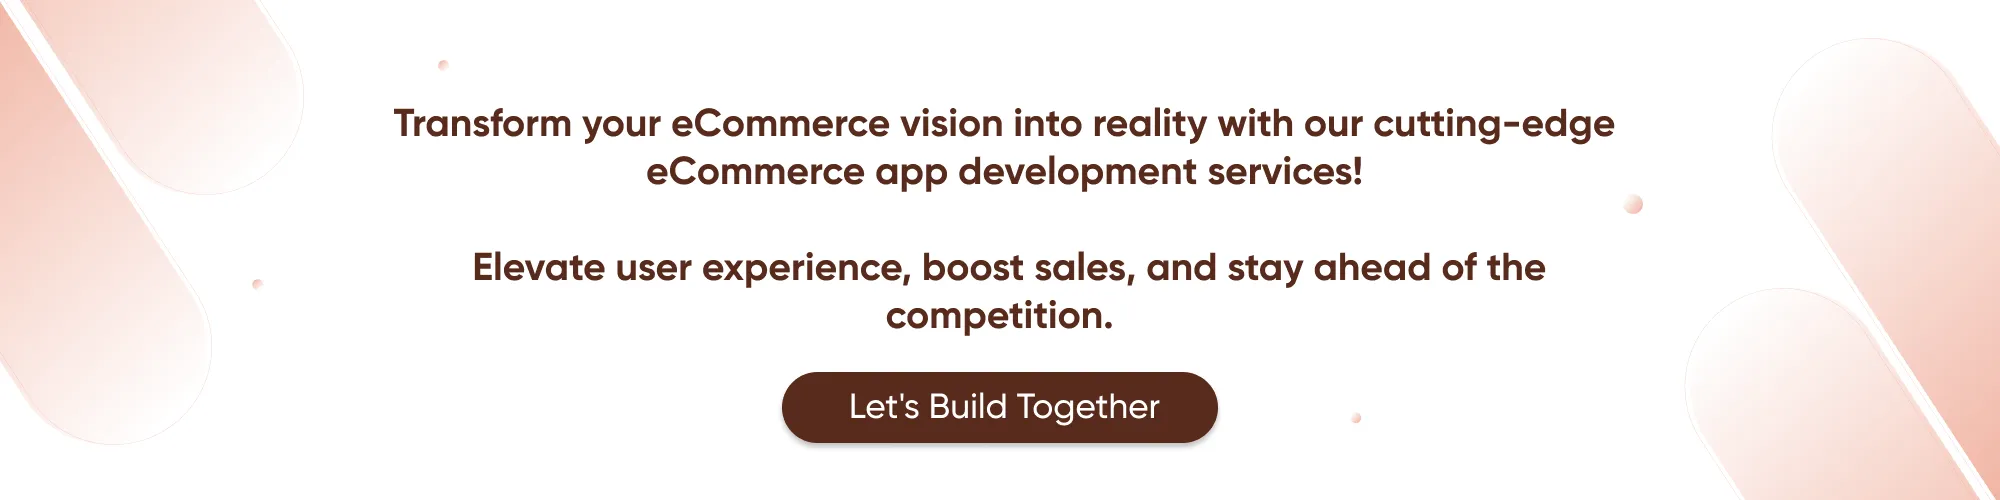 eCommerce app development services-CTA